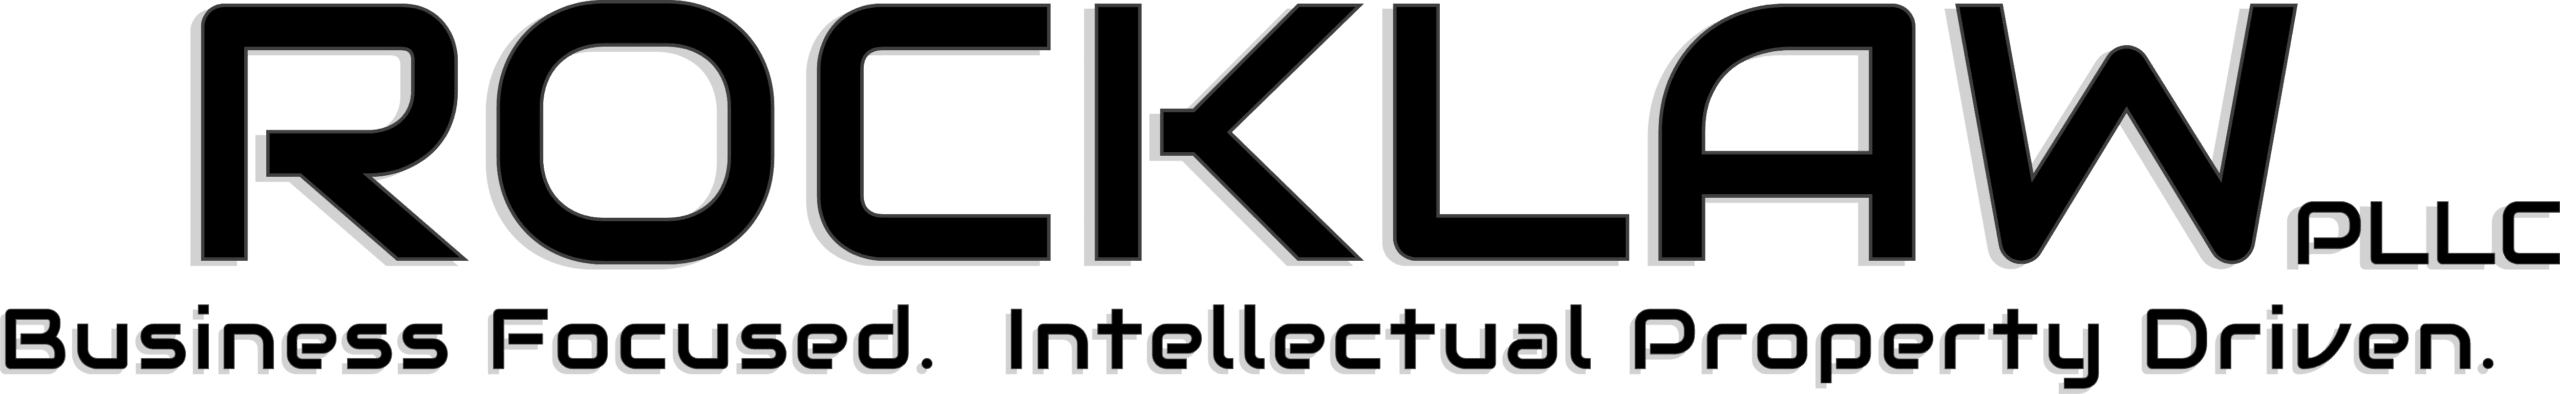 Rocklaw PLLC: Intellectual Property, Software, Data & Branding